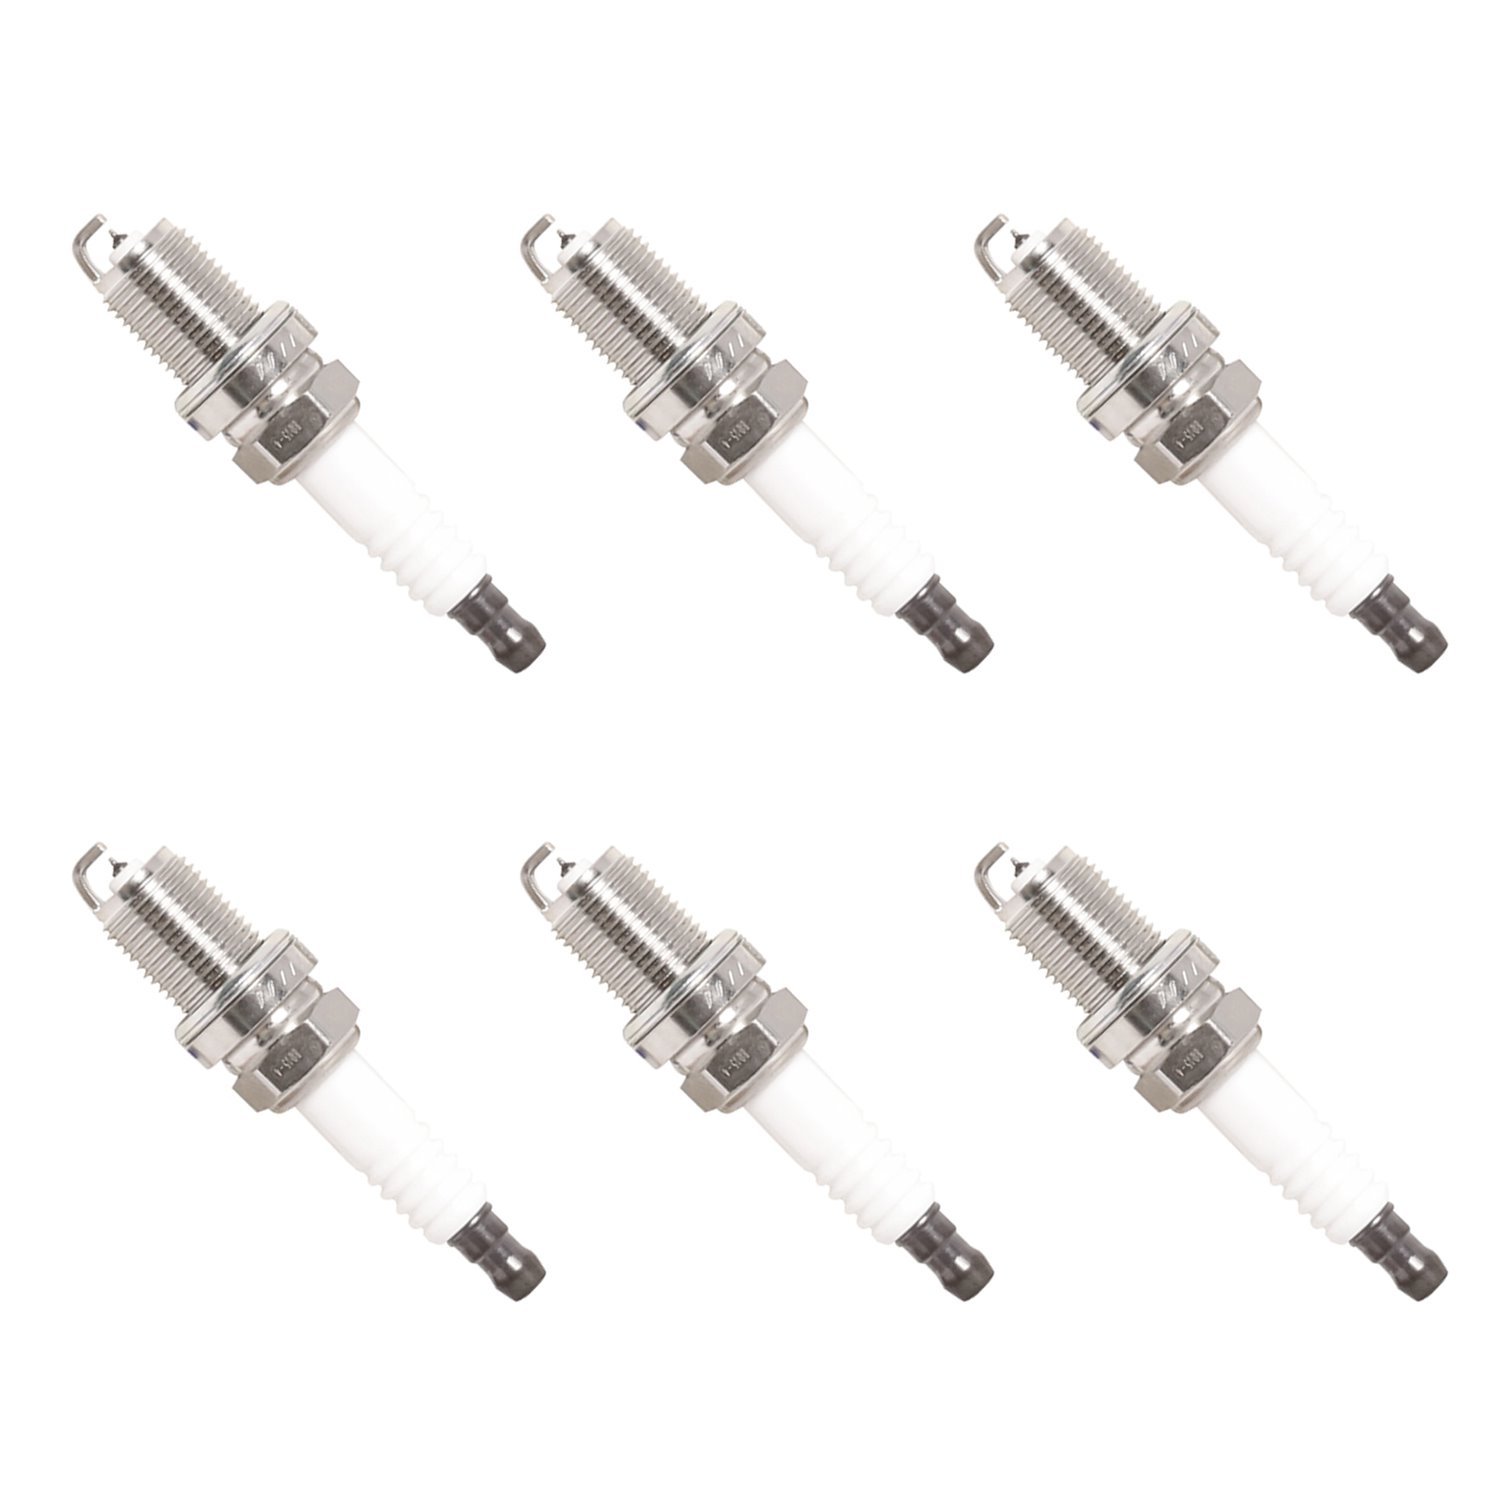 OE Replacement Spark Plug Set for Toyota Corolla, Nissan Sentra/Altima, Mazda Miata, Honda Civic